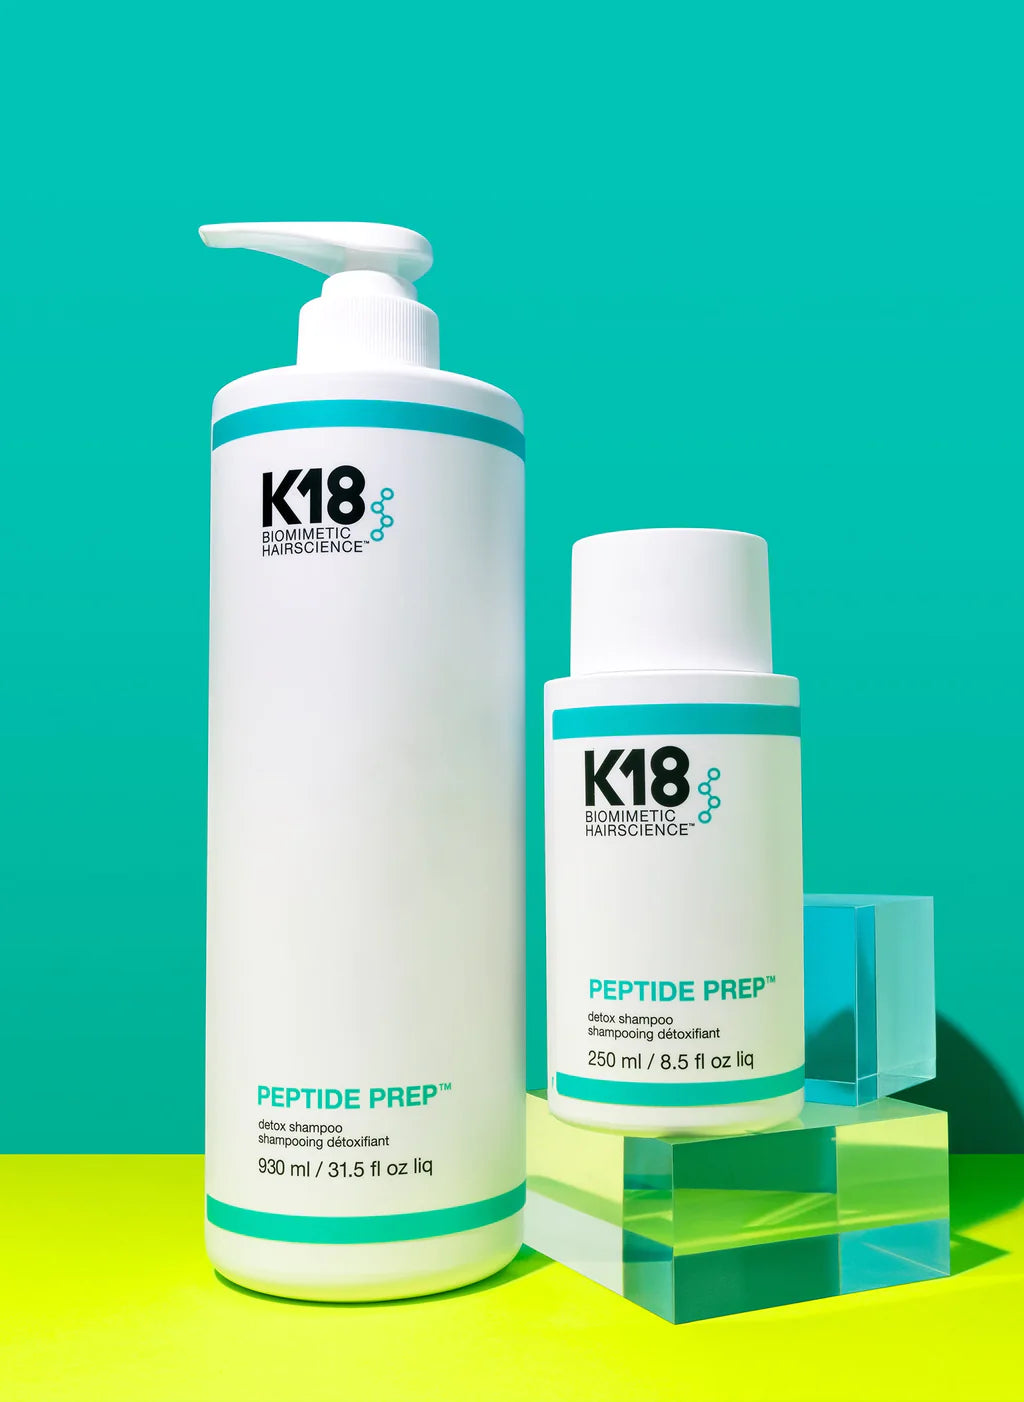 PEPTIDE PREP™ detox shampoo 930ml